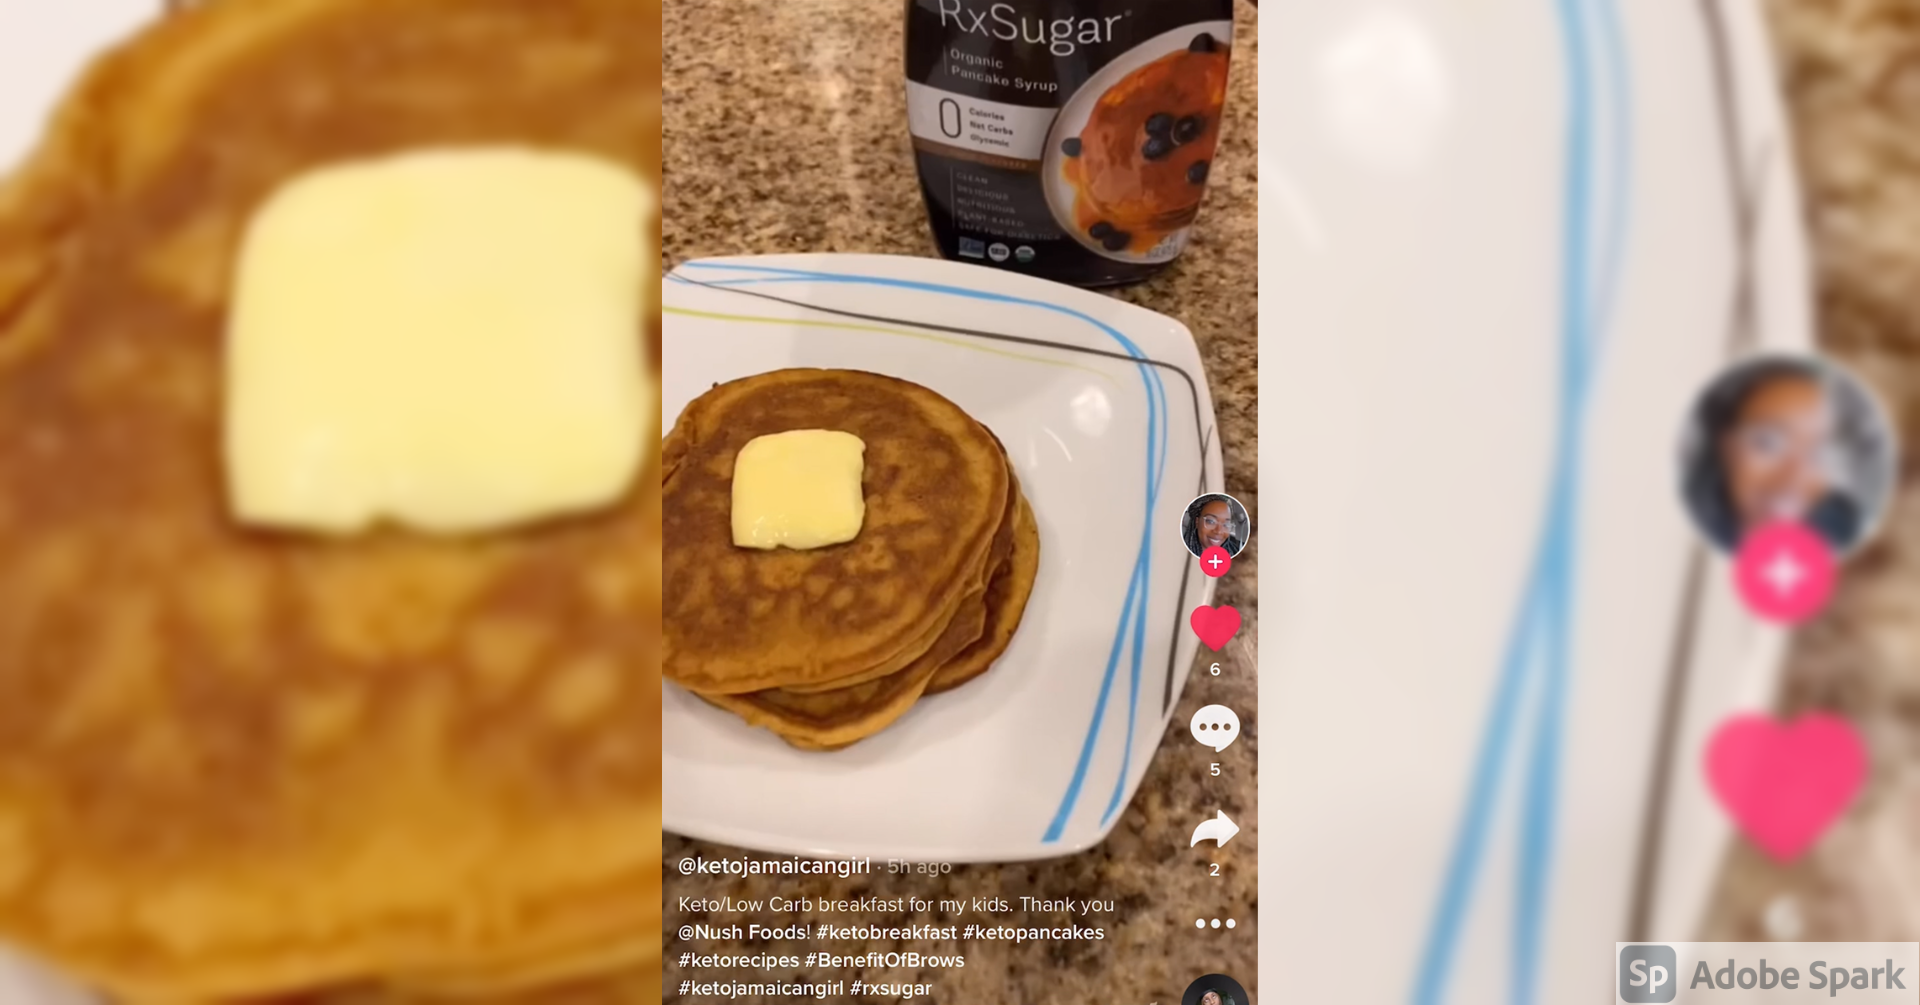 KetoJamaicanGirl Using Her RxSugar Organic Pancake Syrup In Her Breakfast Recipe!